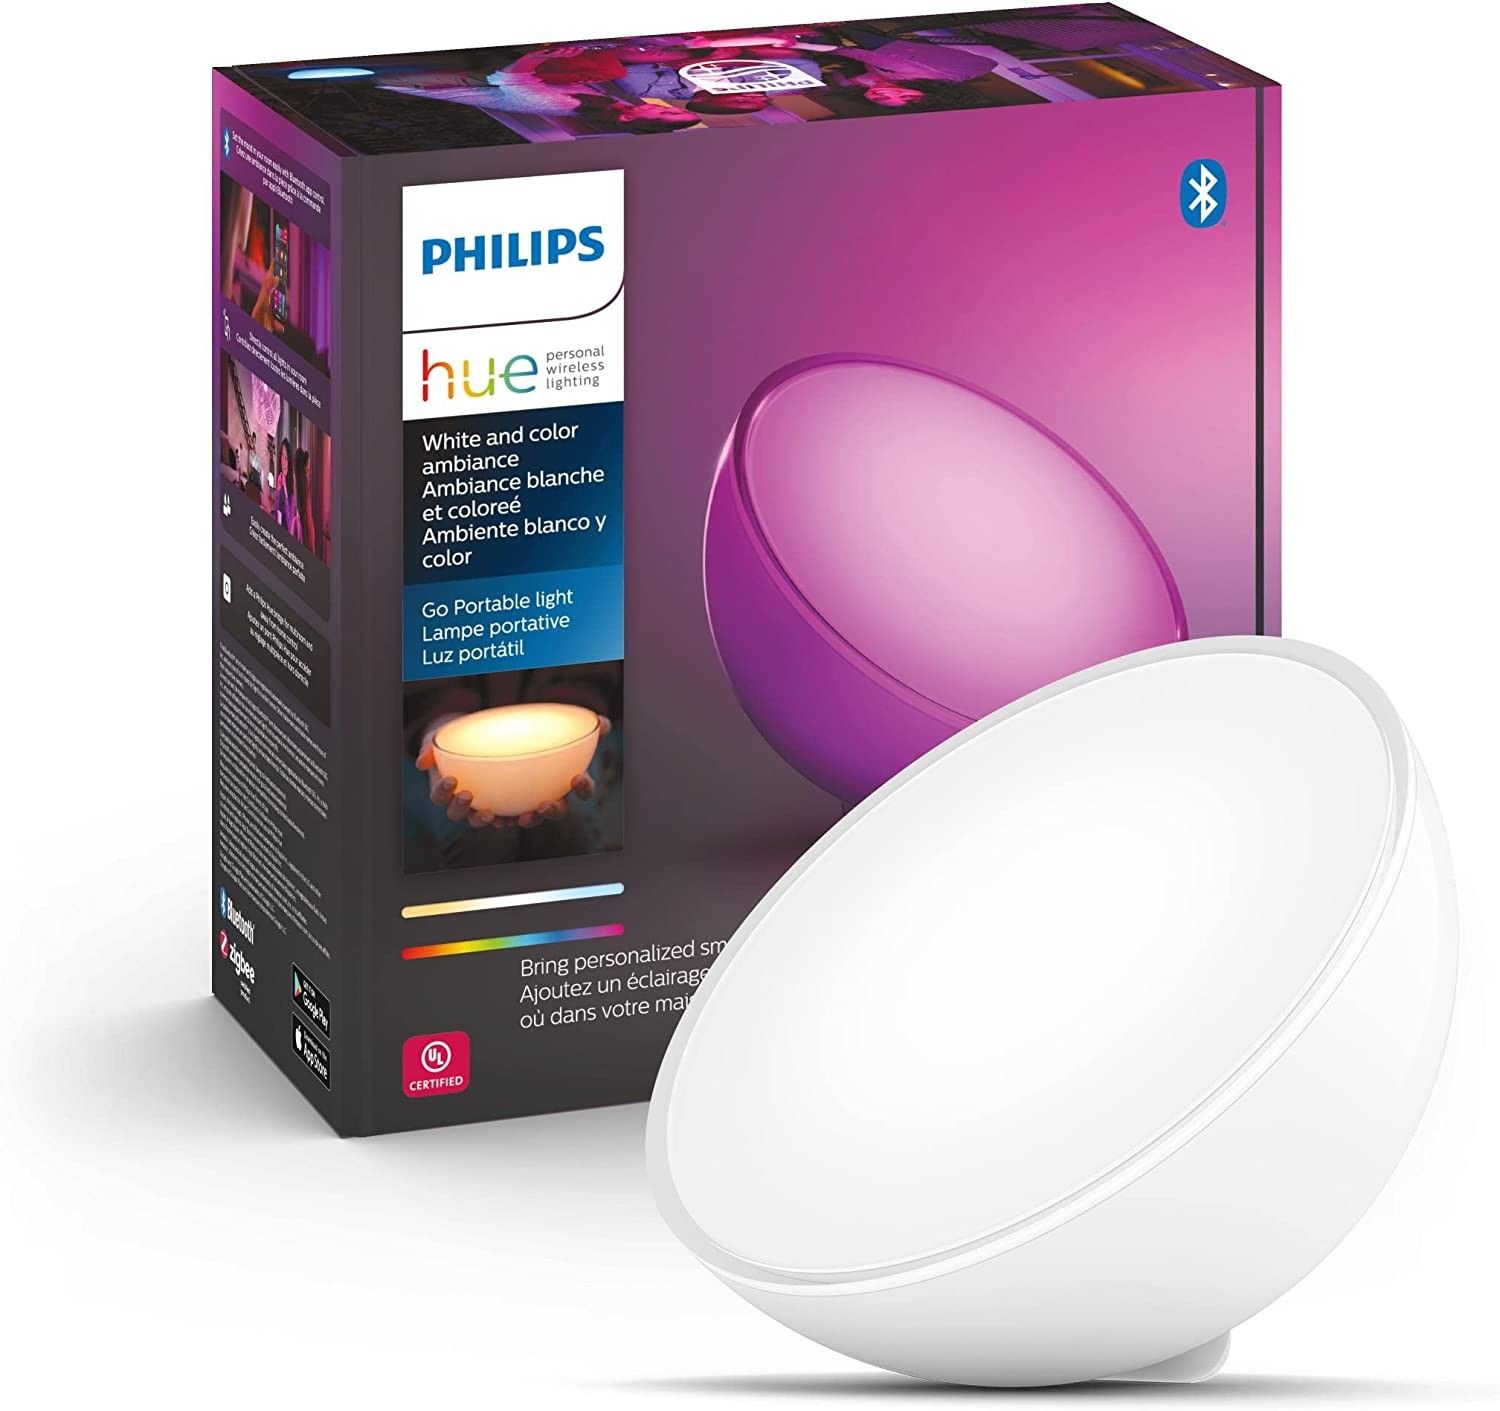 Philips Hue Personal Wireless Lighting 